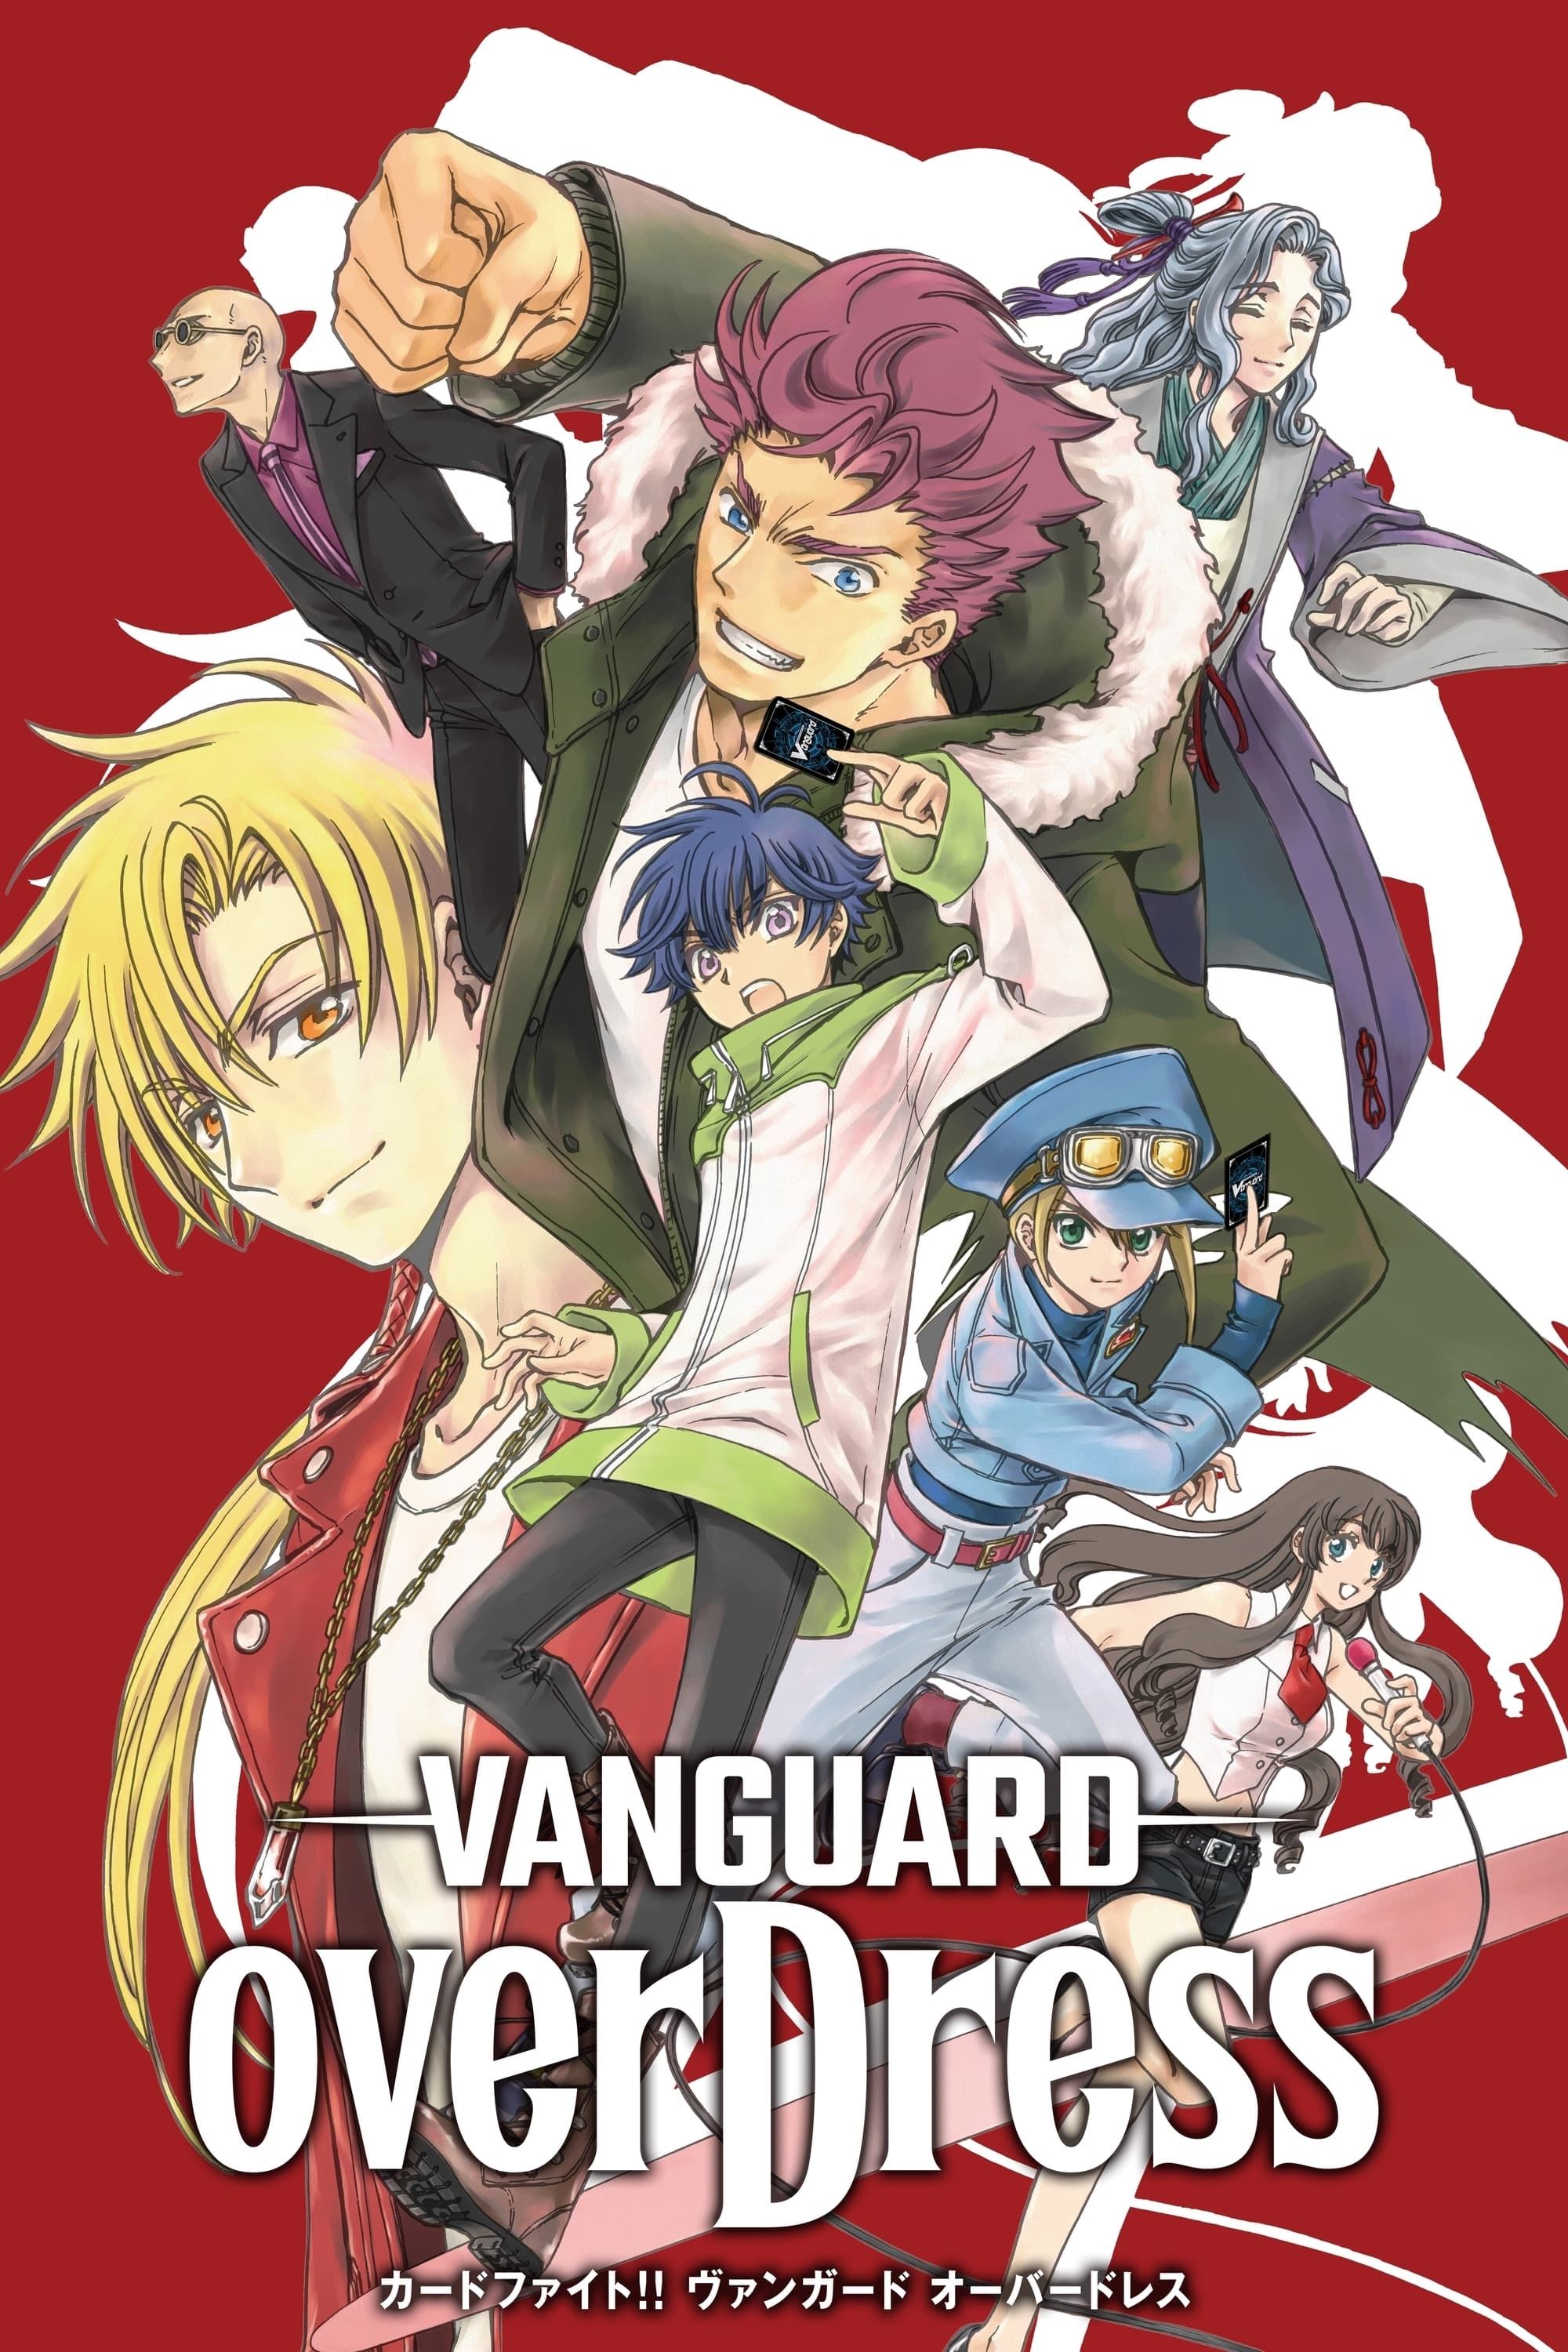 Cardfight!! Vanguard: overDress (Dub) (TV) (Sub) Original Copyright